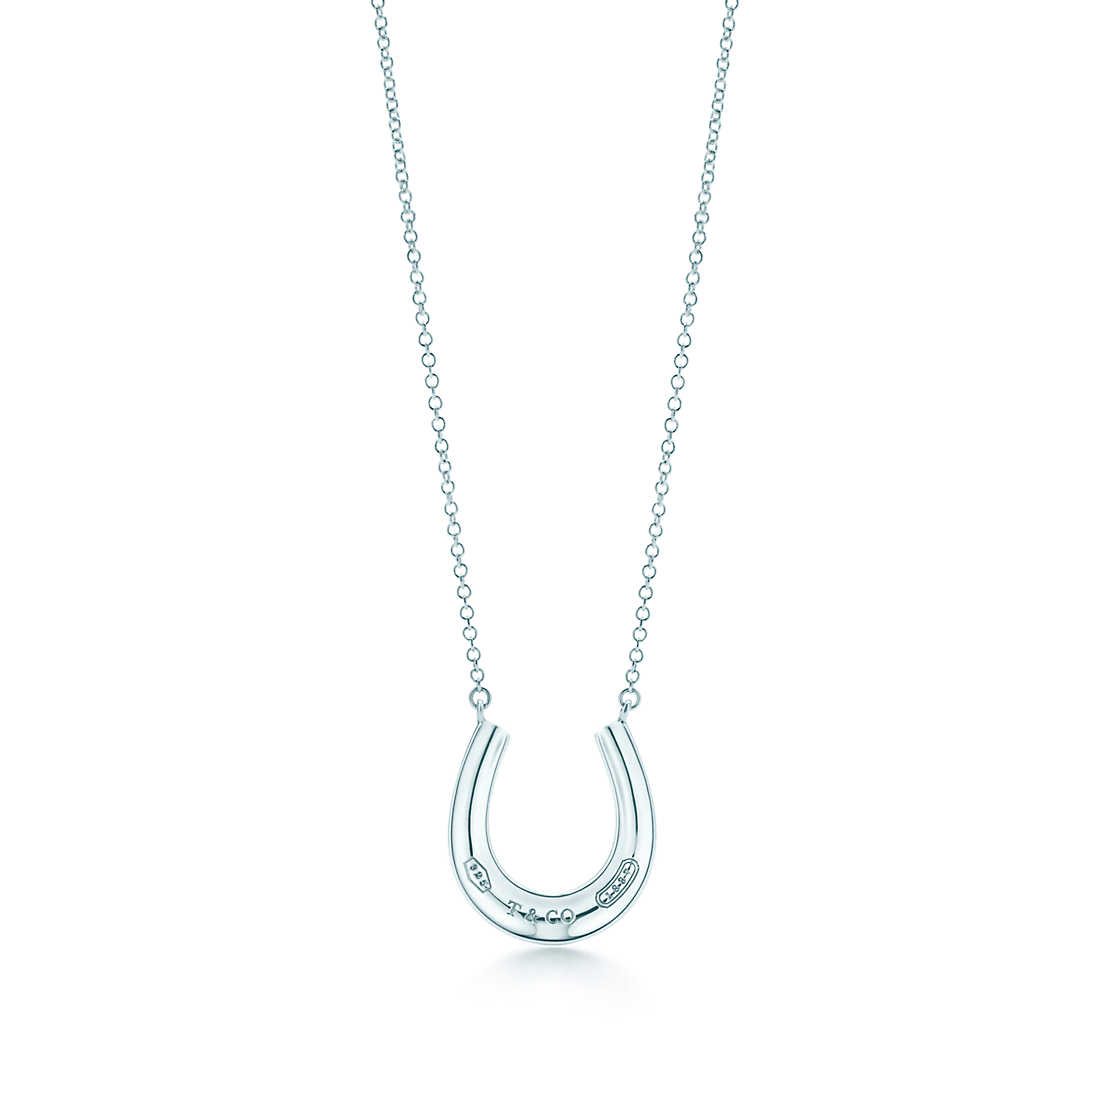 Excellent Tiffany & Co. 1837 Rubedo Metal Horseshoe Silver Necklace 18.75”  | eBay